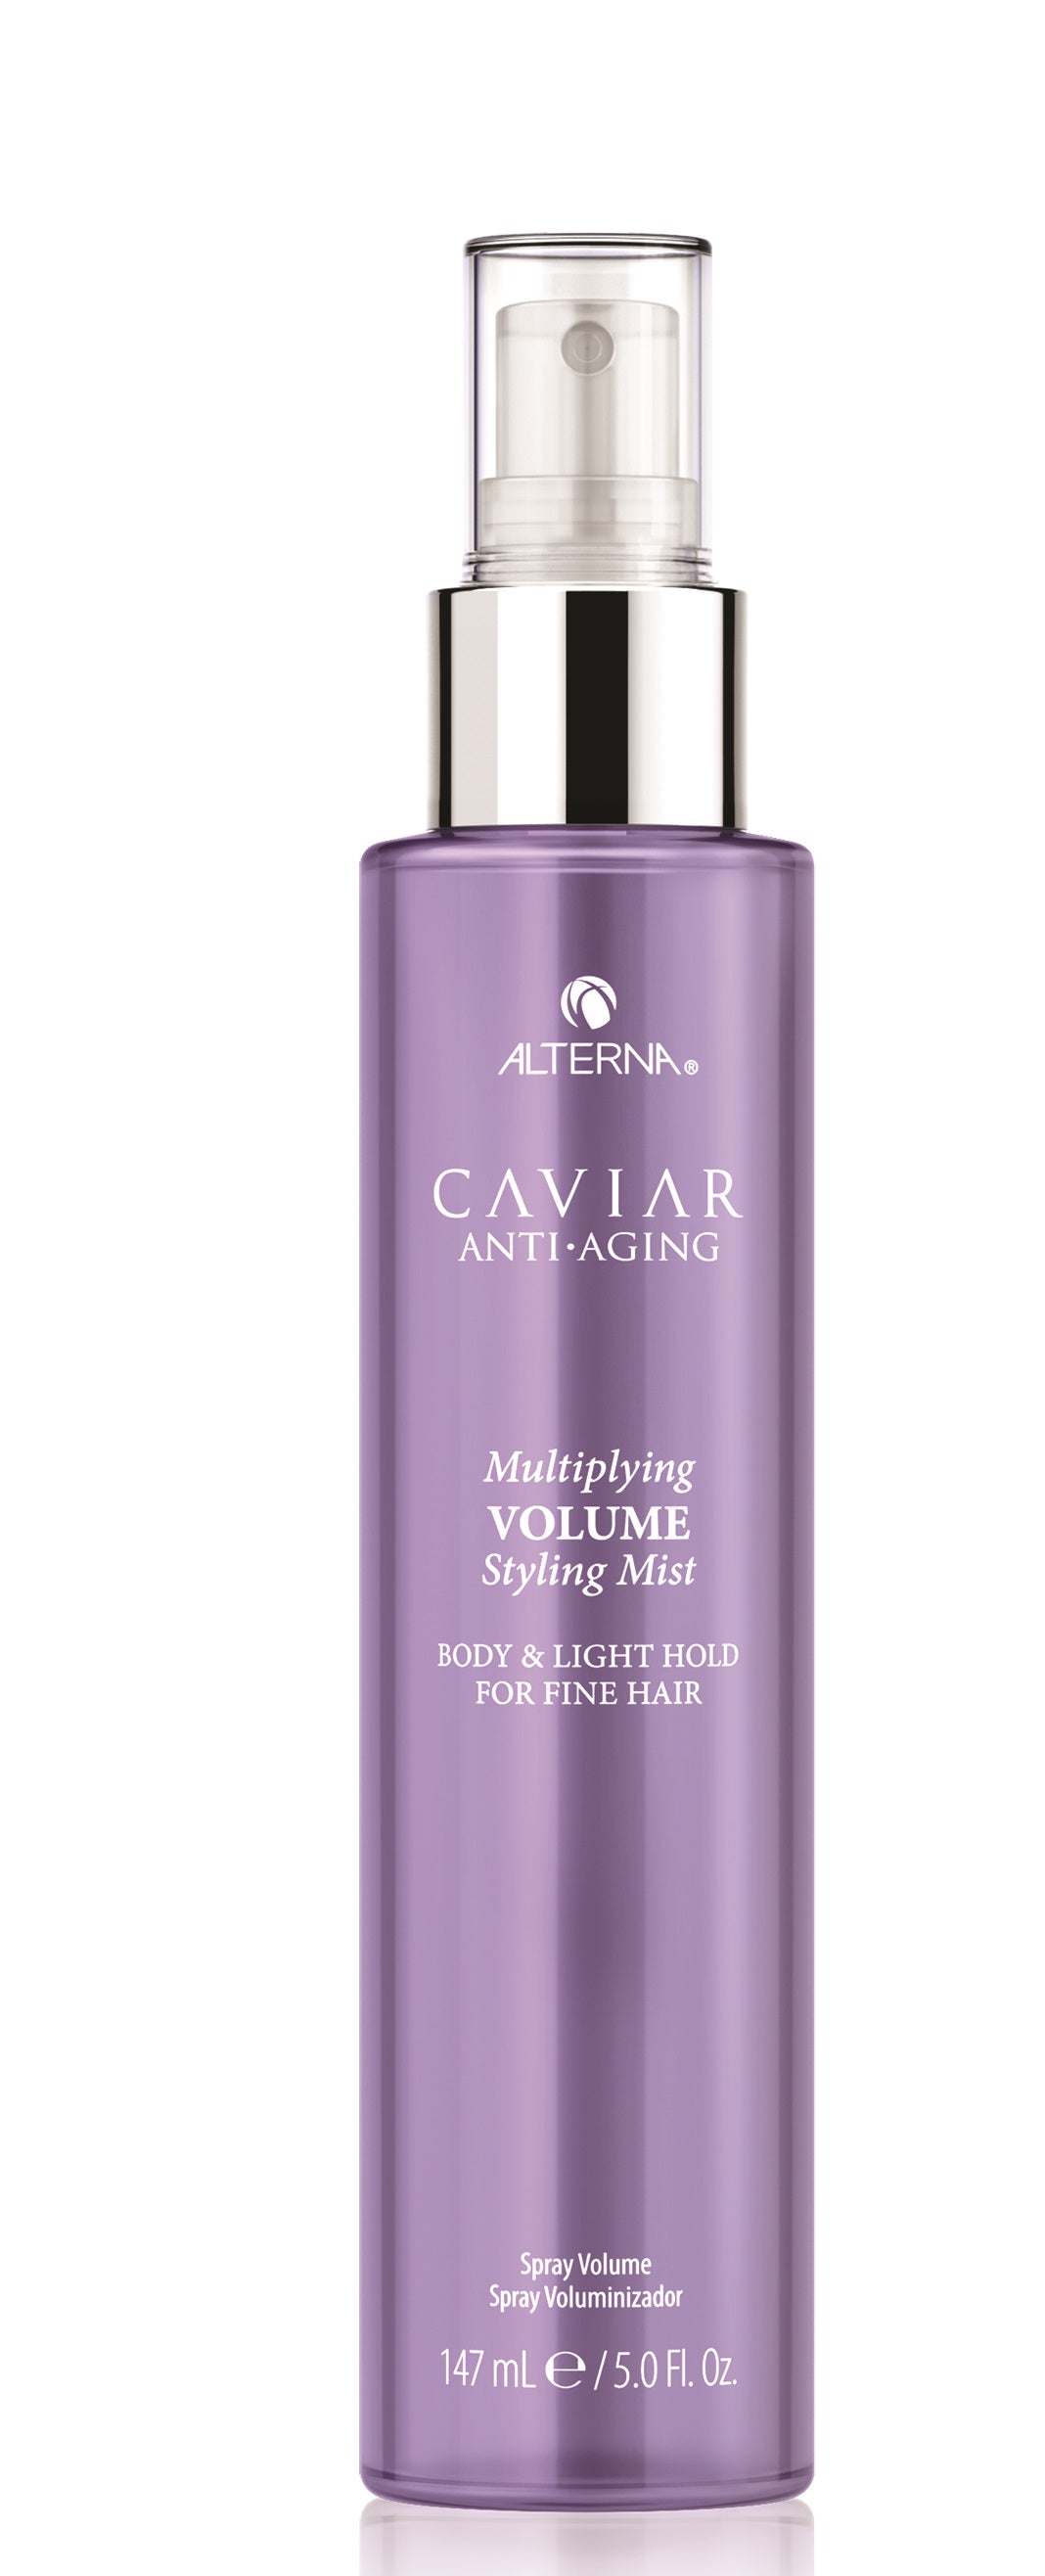 Alterna Caviar Anti-Aging Multiplying Volume Styling Mist 147 ml